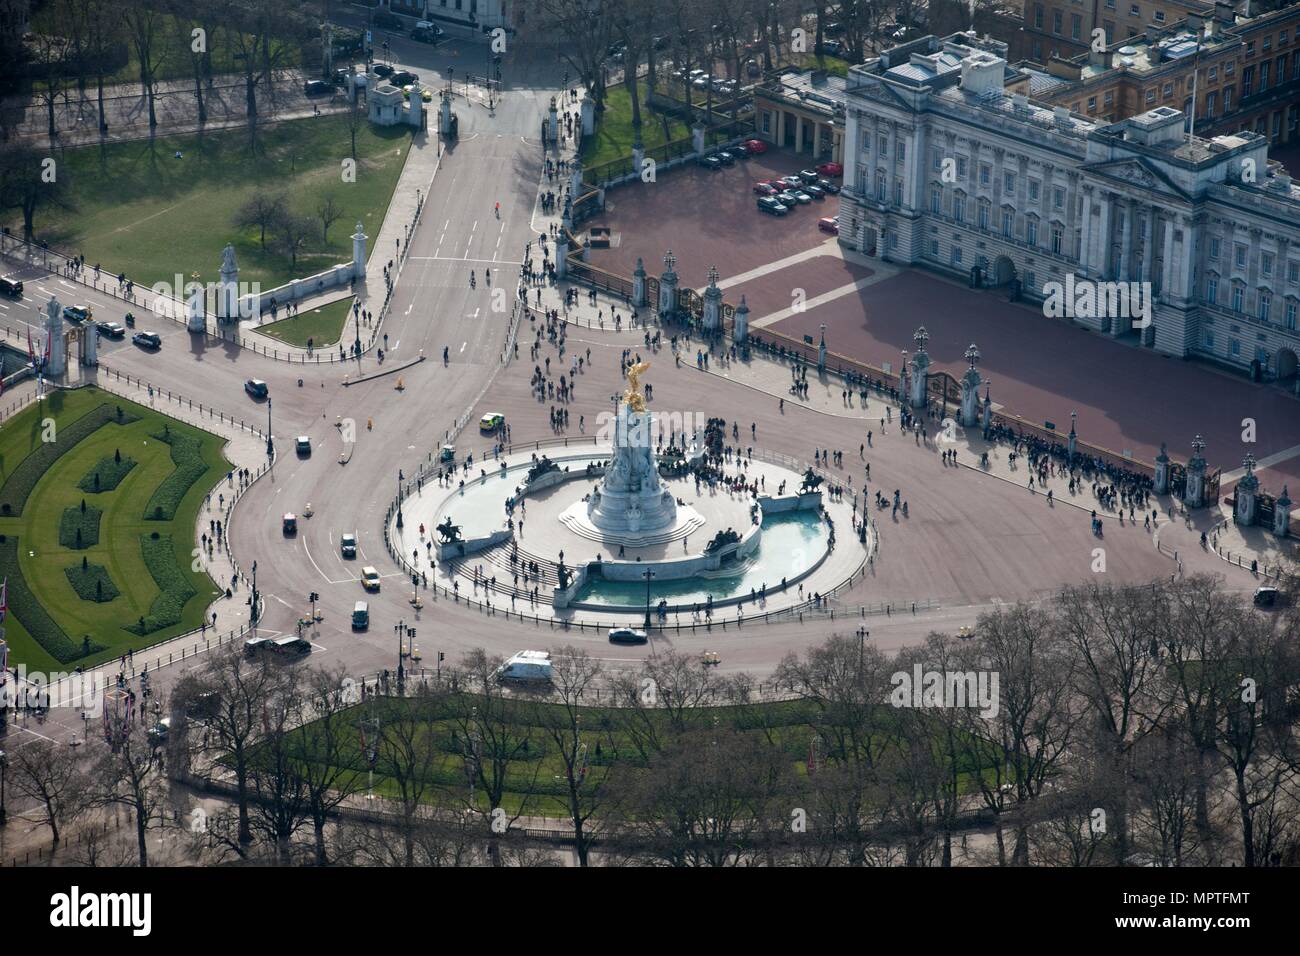 Queen Victoria Memorial outside Buckingham Palace, Westminster, London, 2015. Artist: Damian Grady. Stock Photo